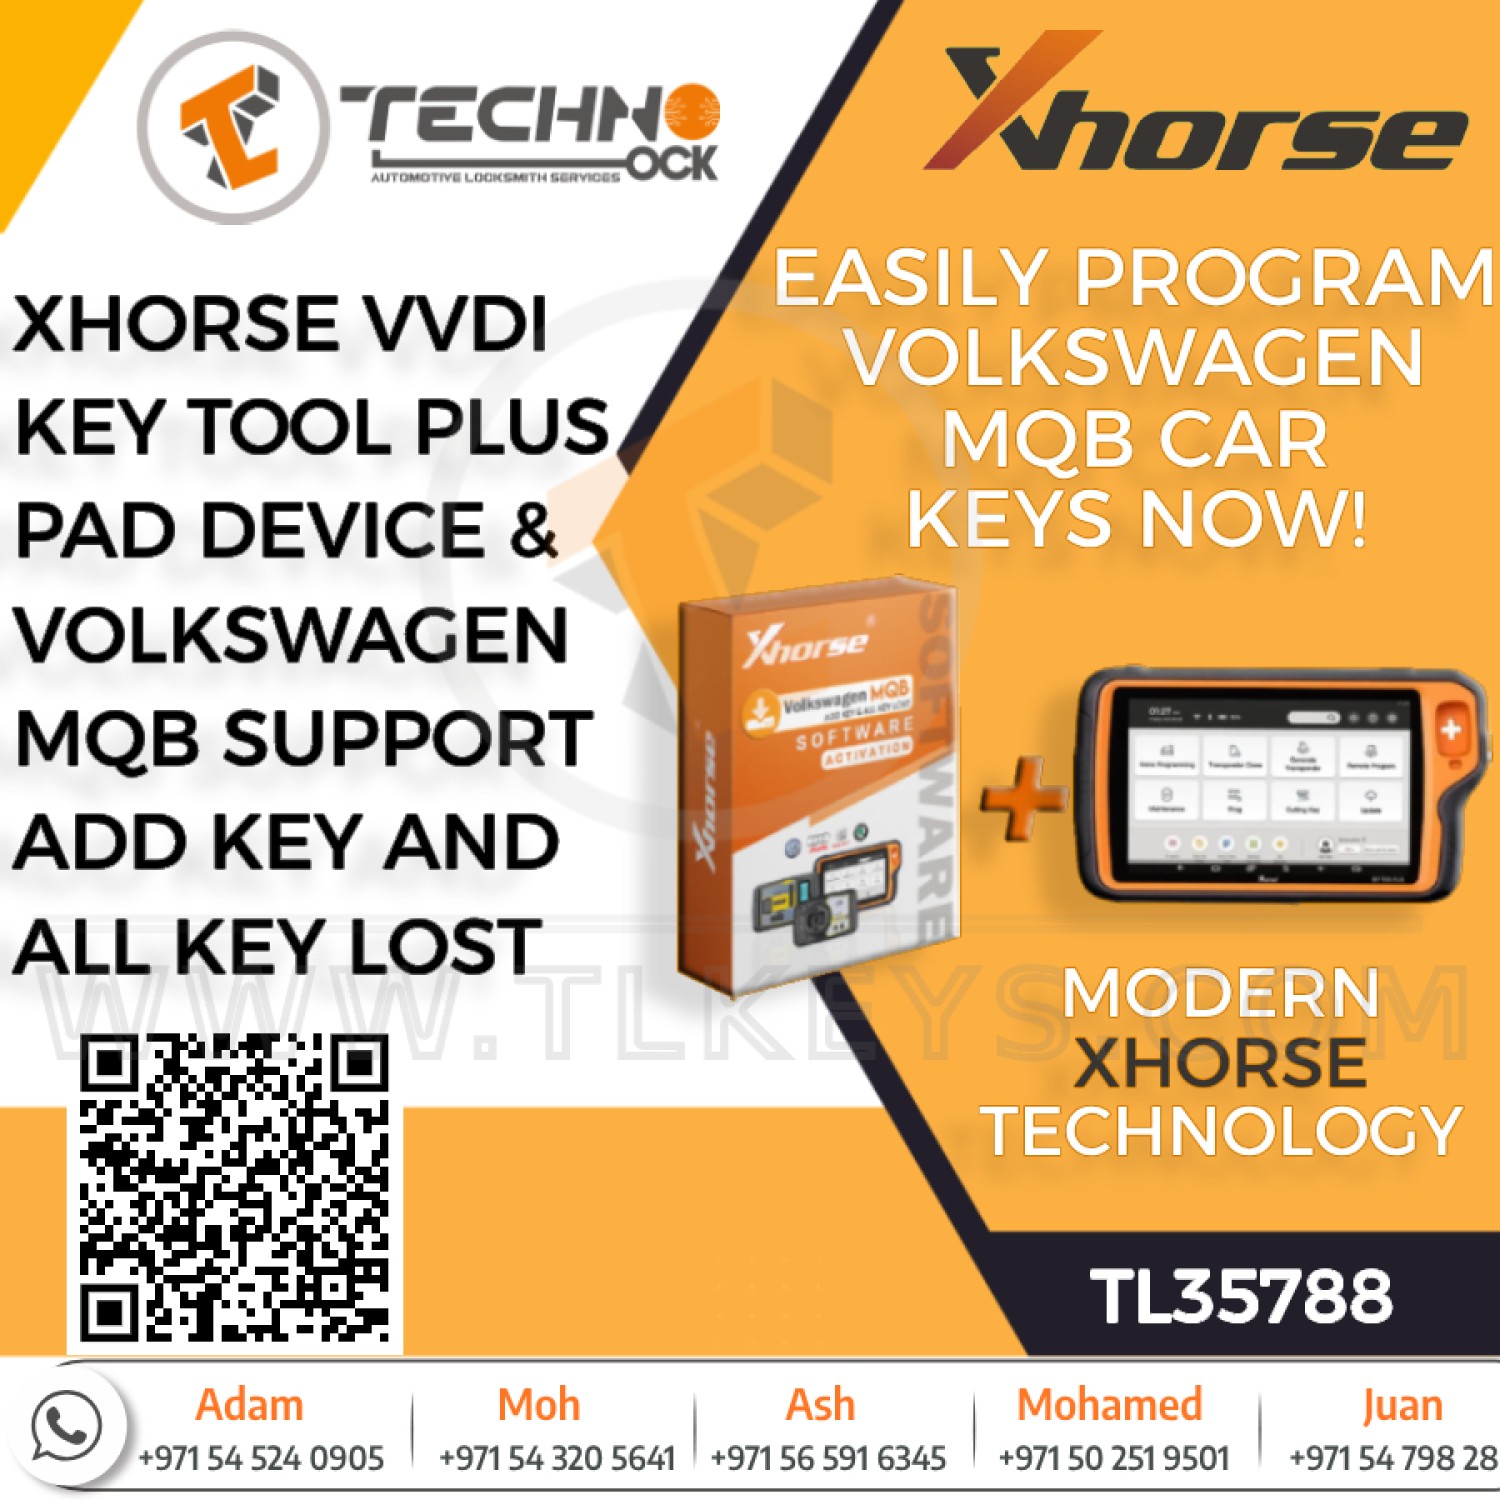  Volkswagen MQB Car Keys Programming - Xhorse VVDI Key Tool Plus Pad